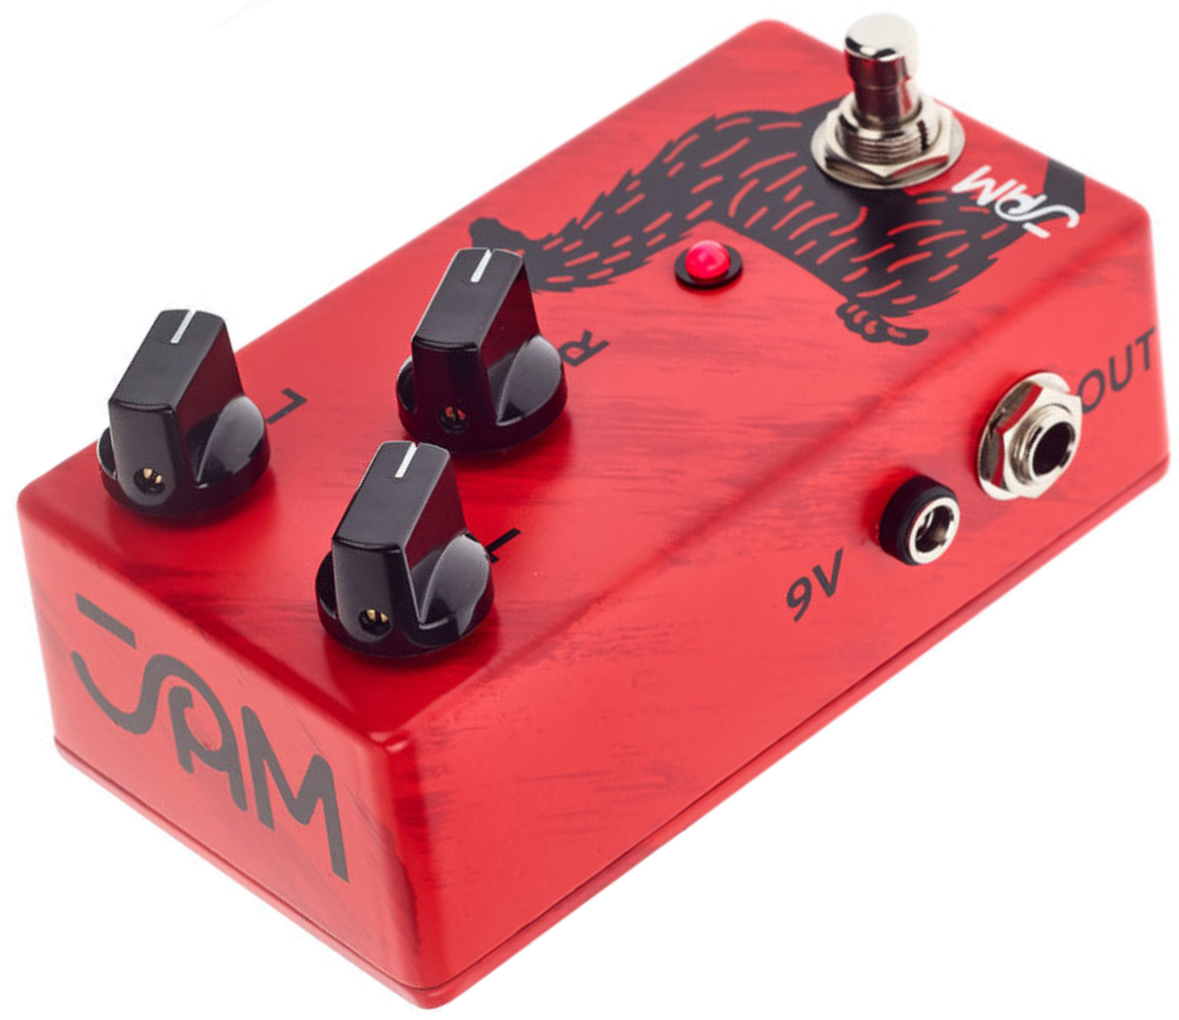 Jam Delay Llama Mk2 - Reverb, delay & echo effect pedal - Variation 3